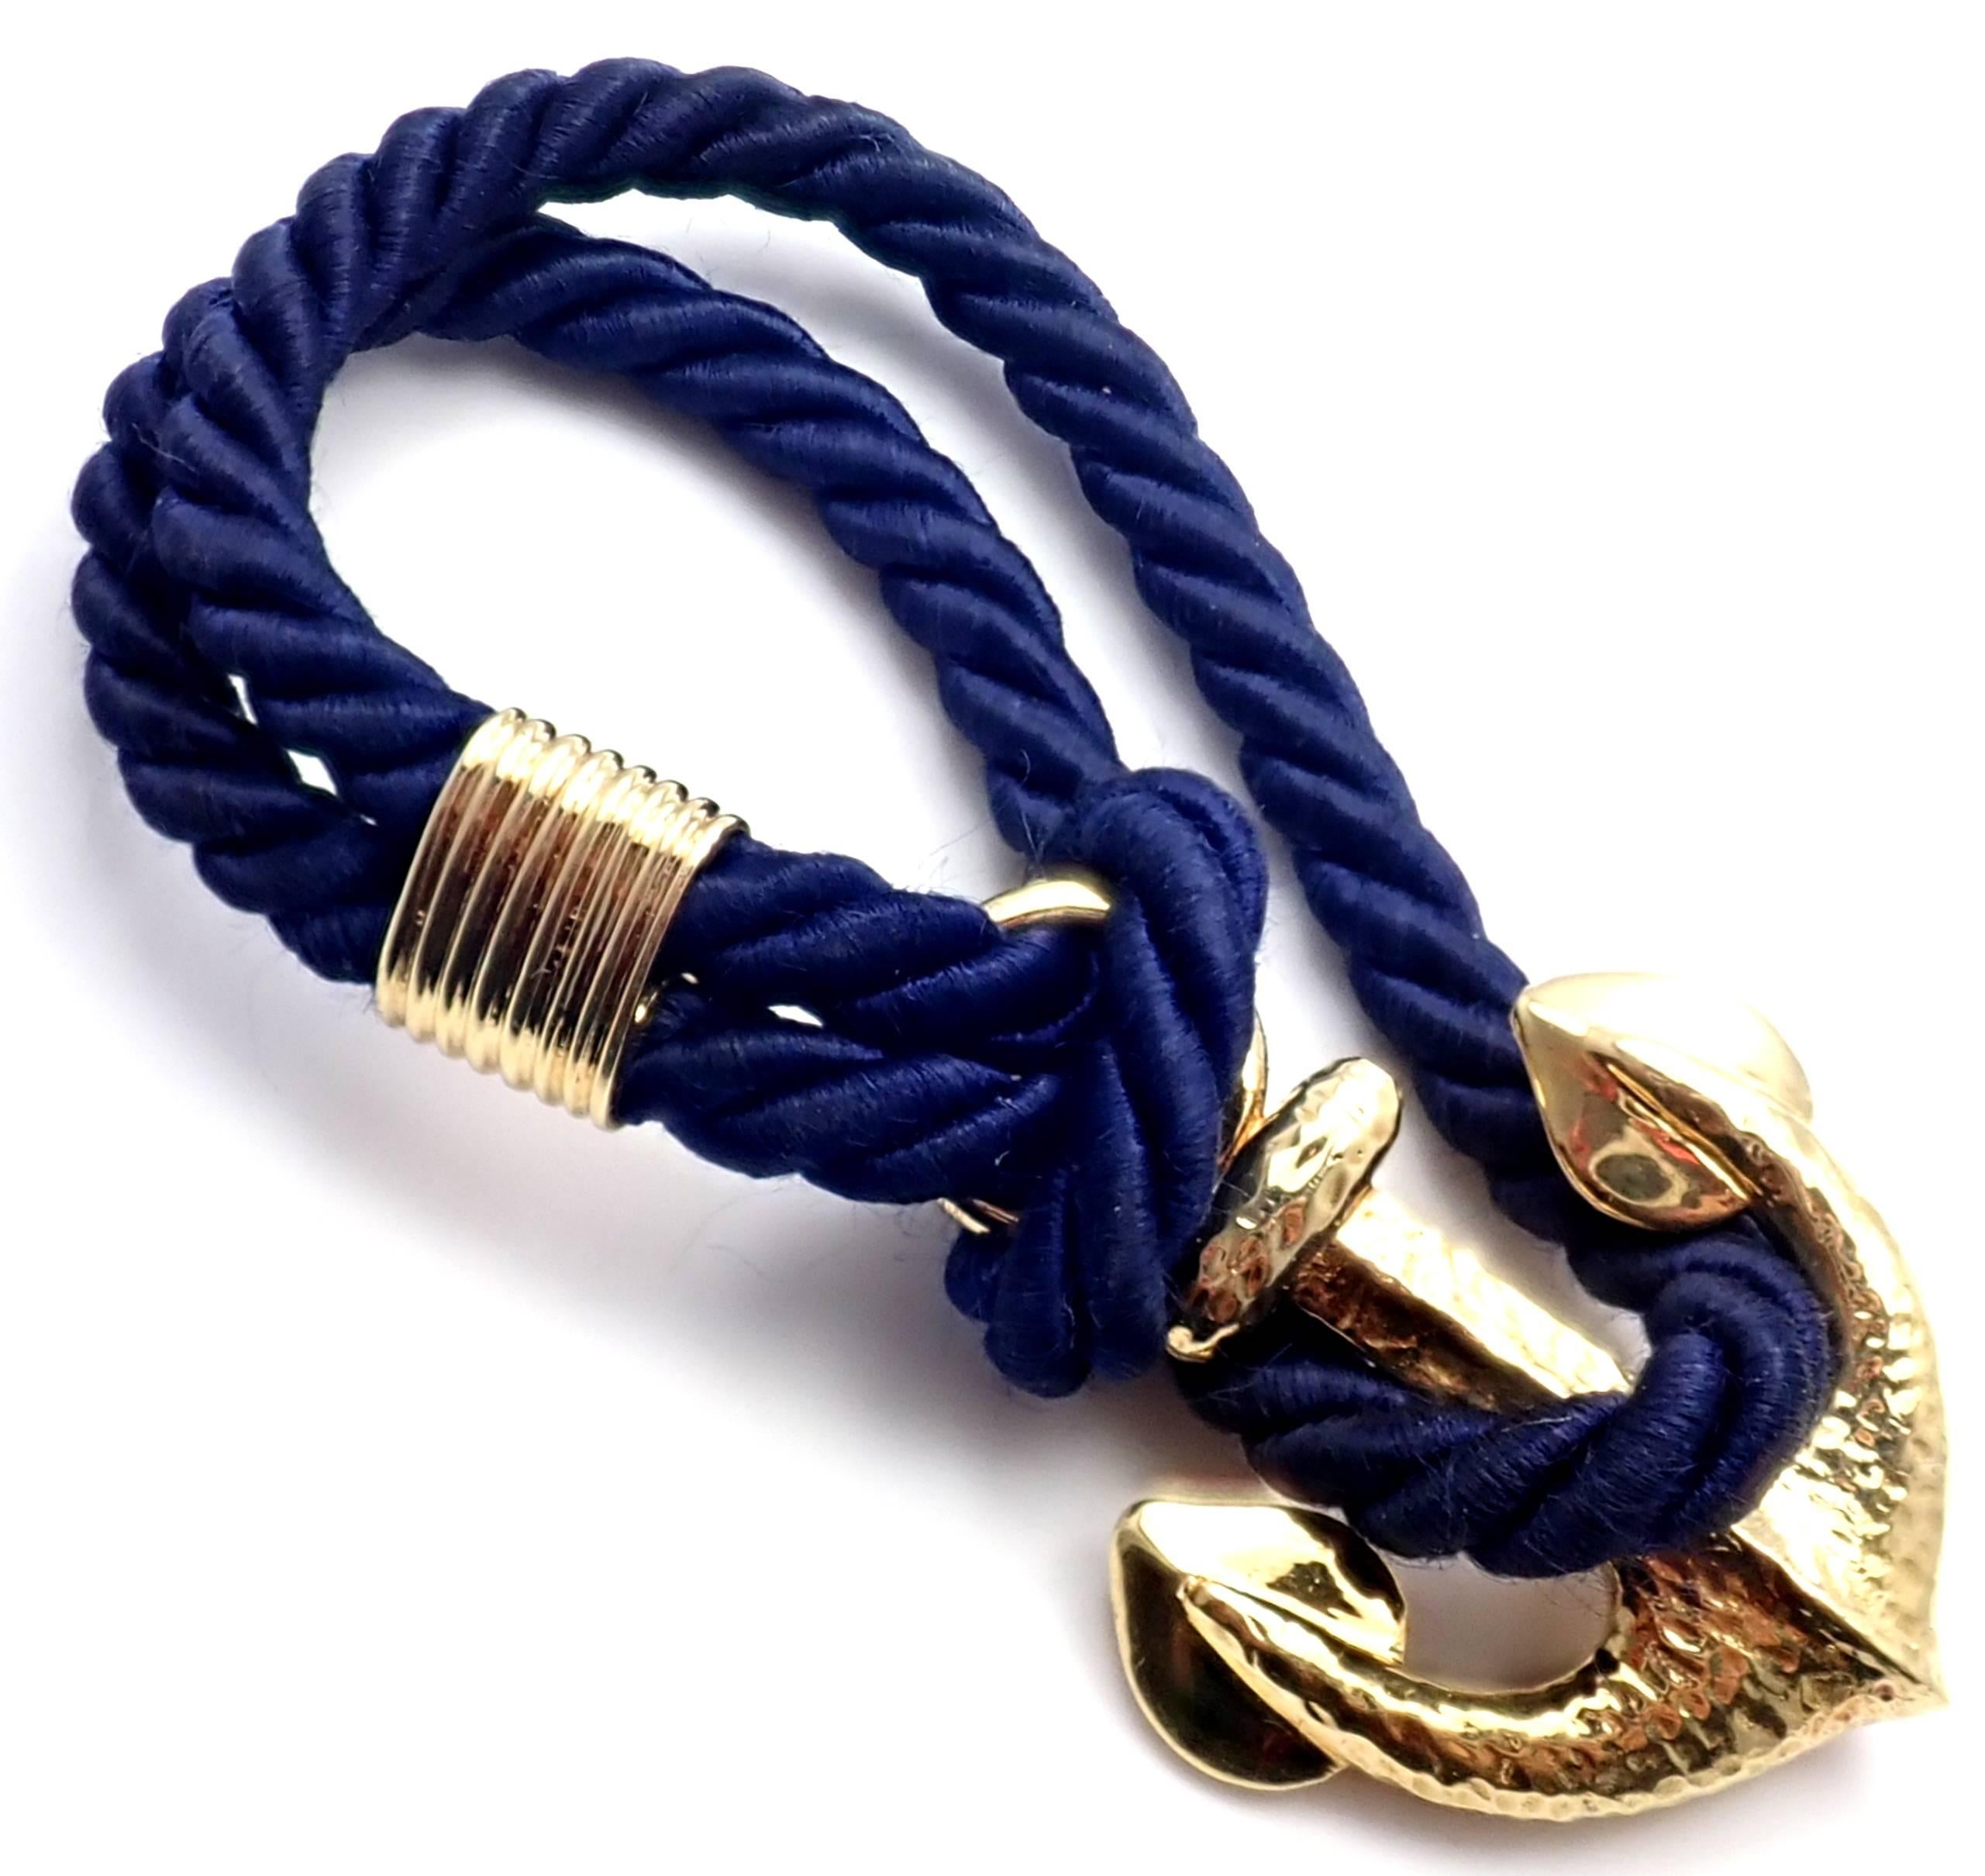 Vintage 18k Yellow Gold Anchor Navy Silk Bracelet by Van Cleef & Arpels.
Details:
Length: 6.25